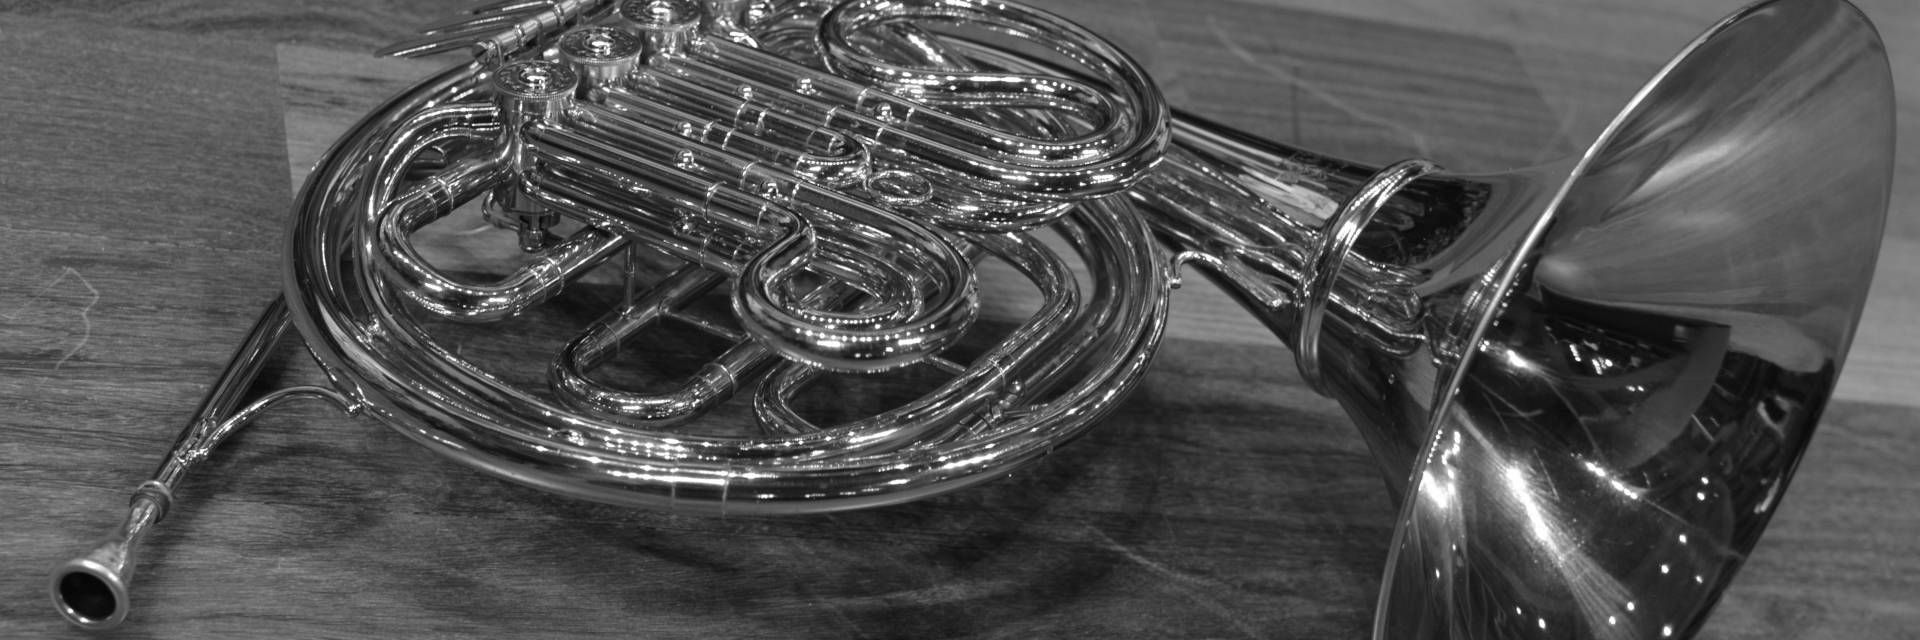 Image: French horn lying on hardwood floor